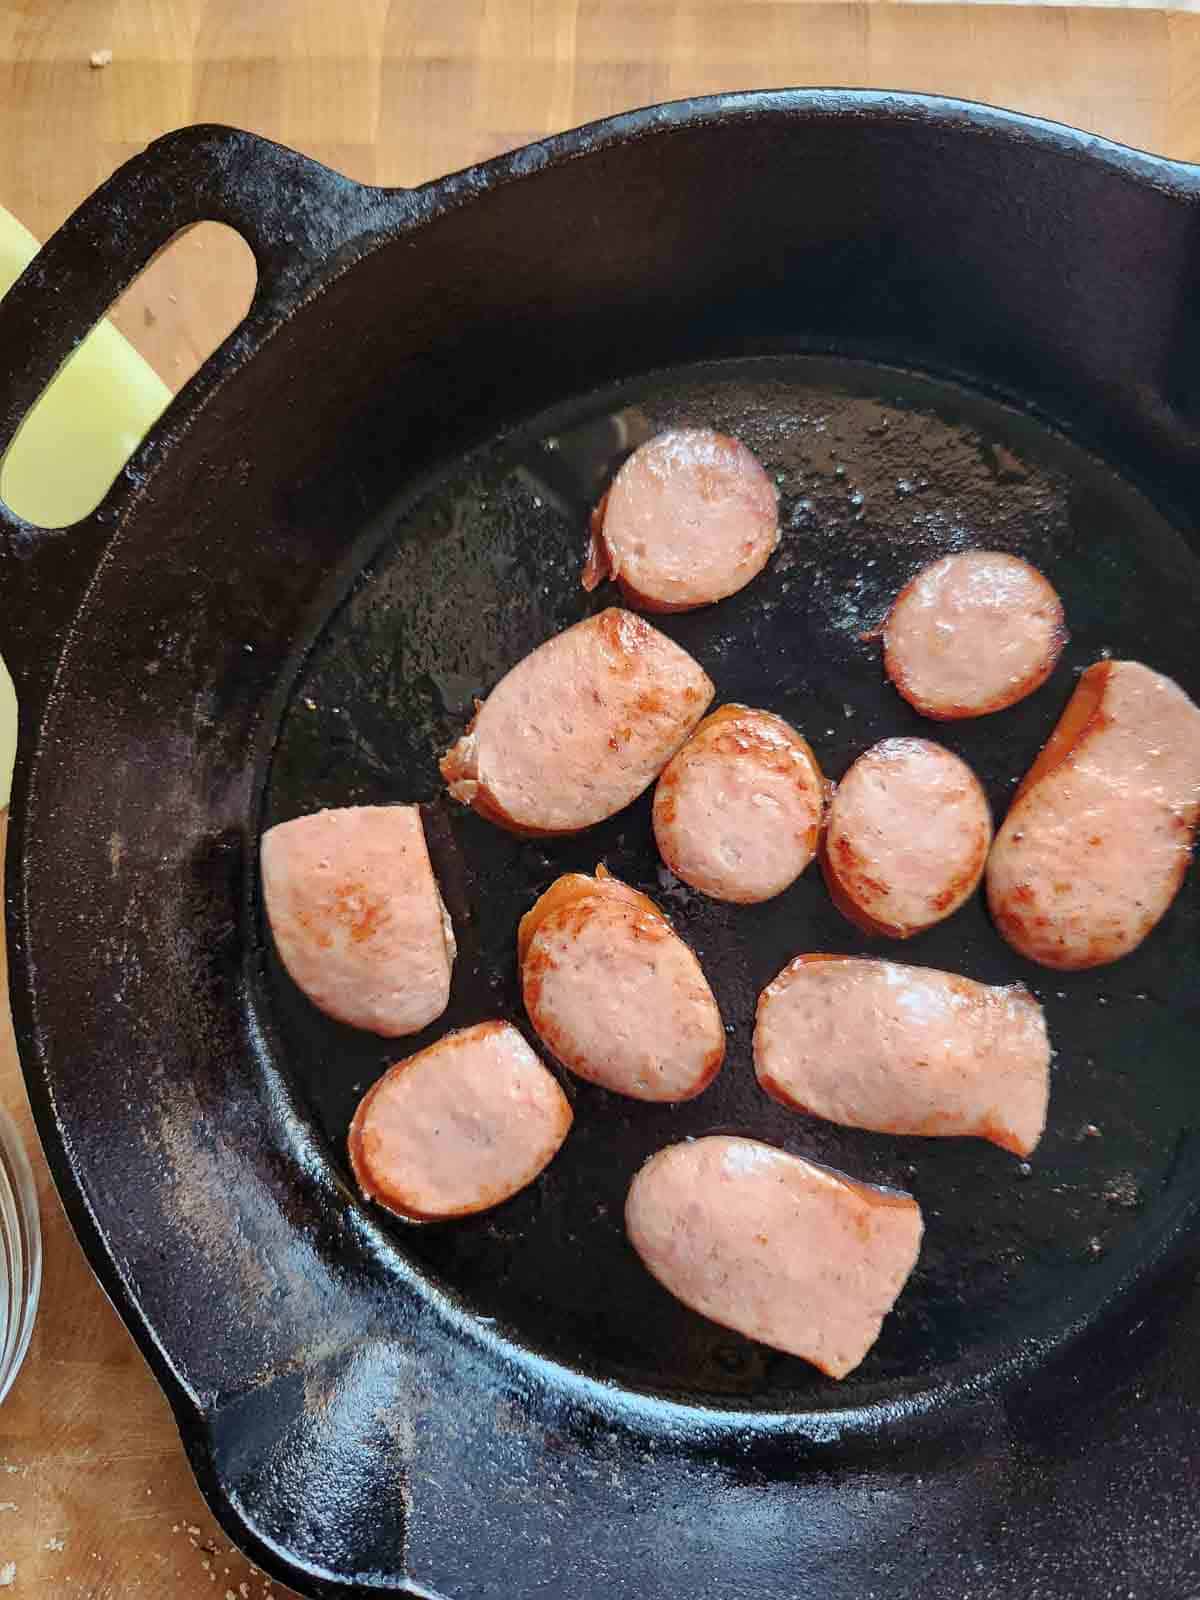 Fried kielbasa sausage in a cast iron skillet.